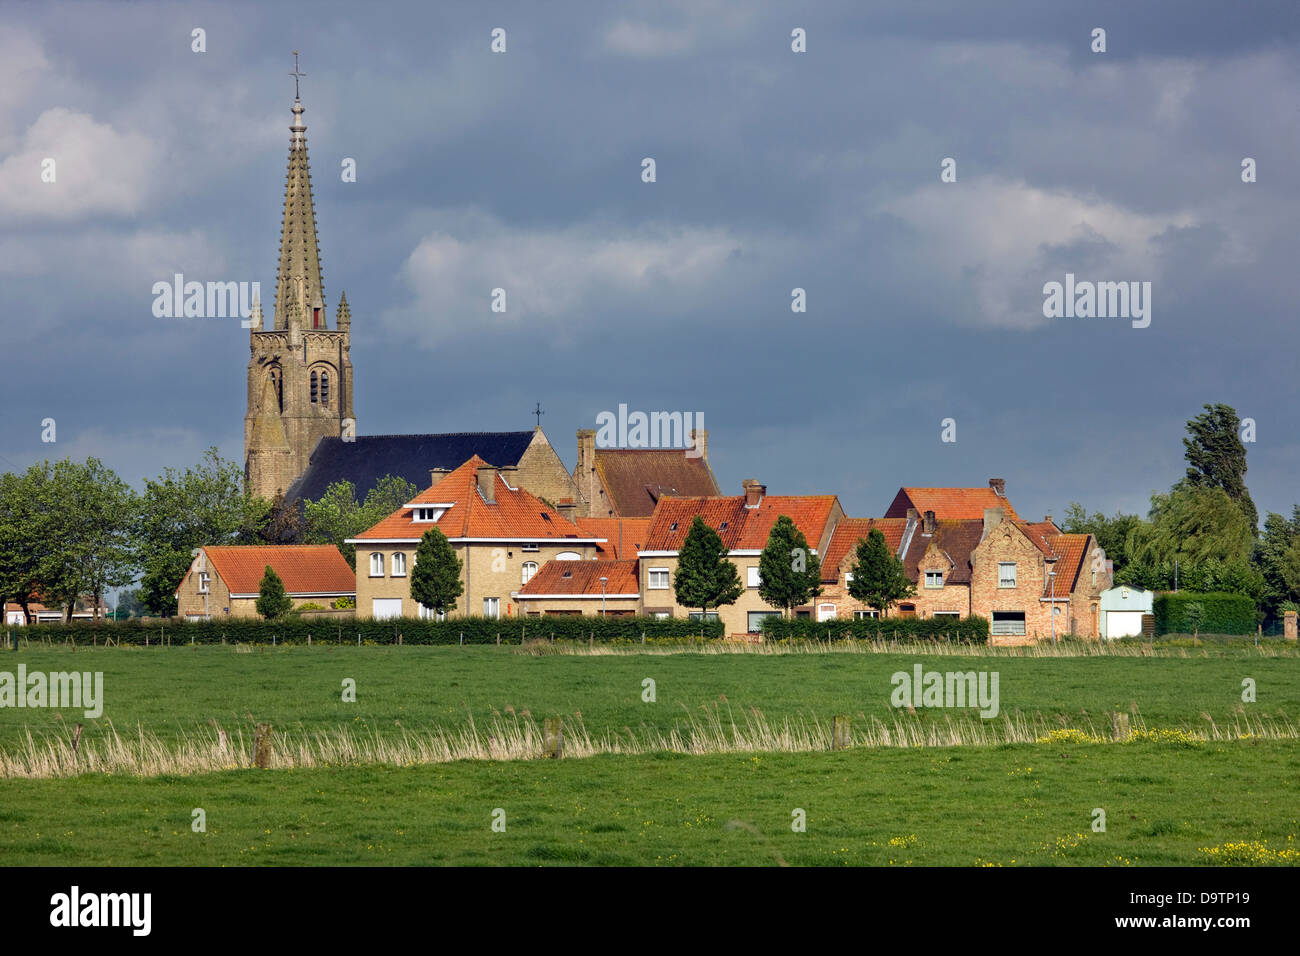 The Saint Peter's Church at Stuivekenskerke, West Flanders, Belgium Stock Photo